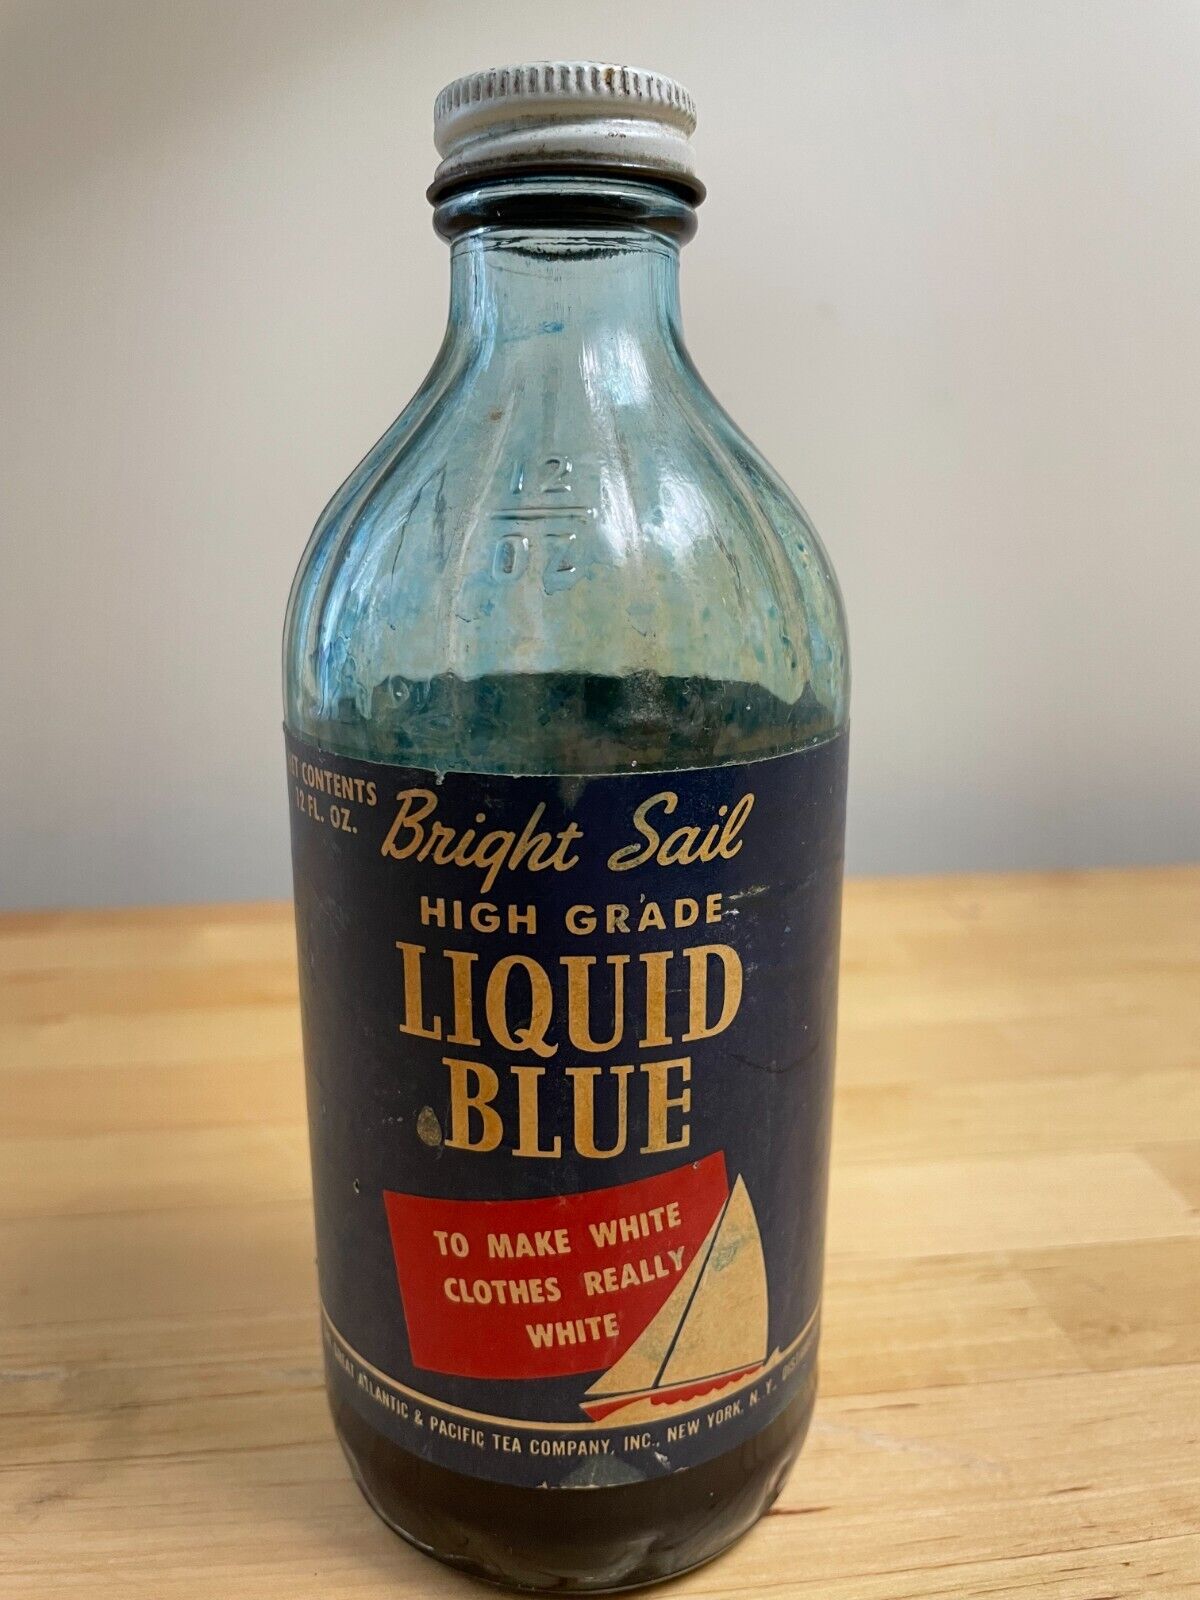 Vintage Bottle of Bright Sail Liquid Blue